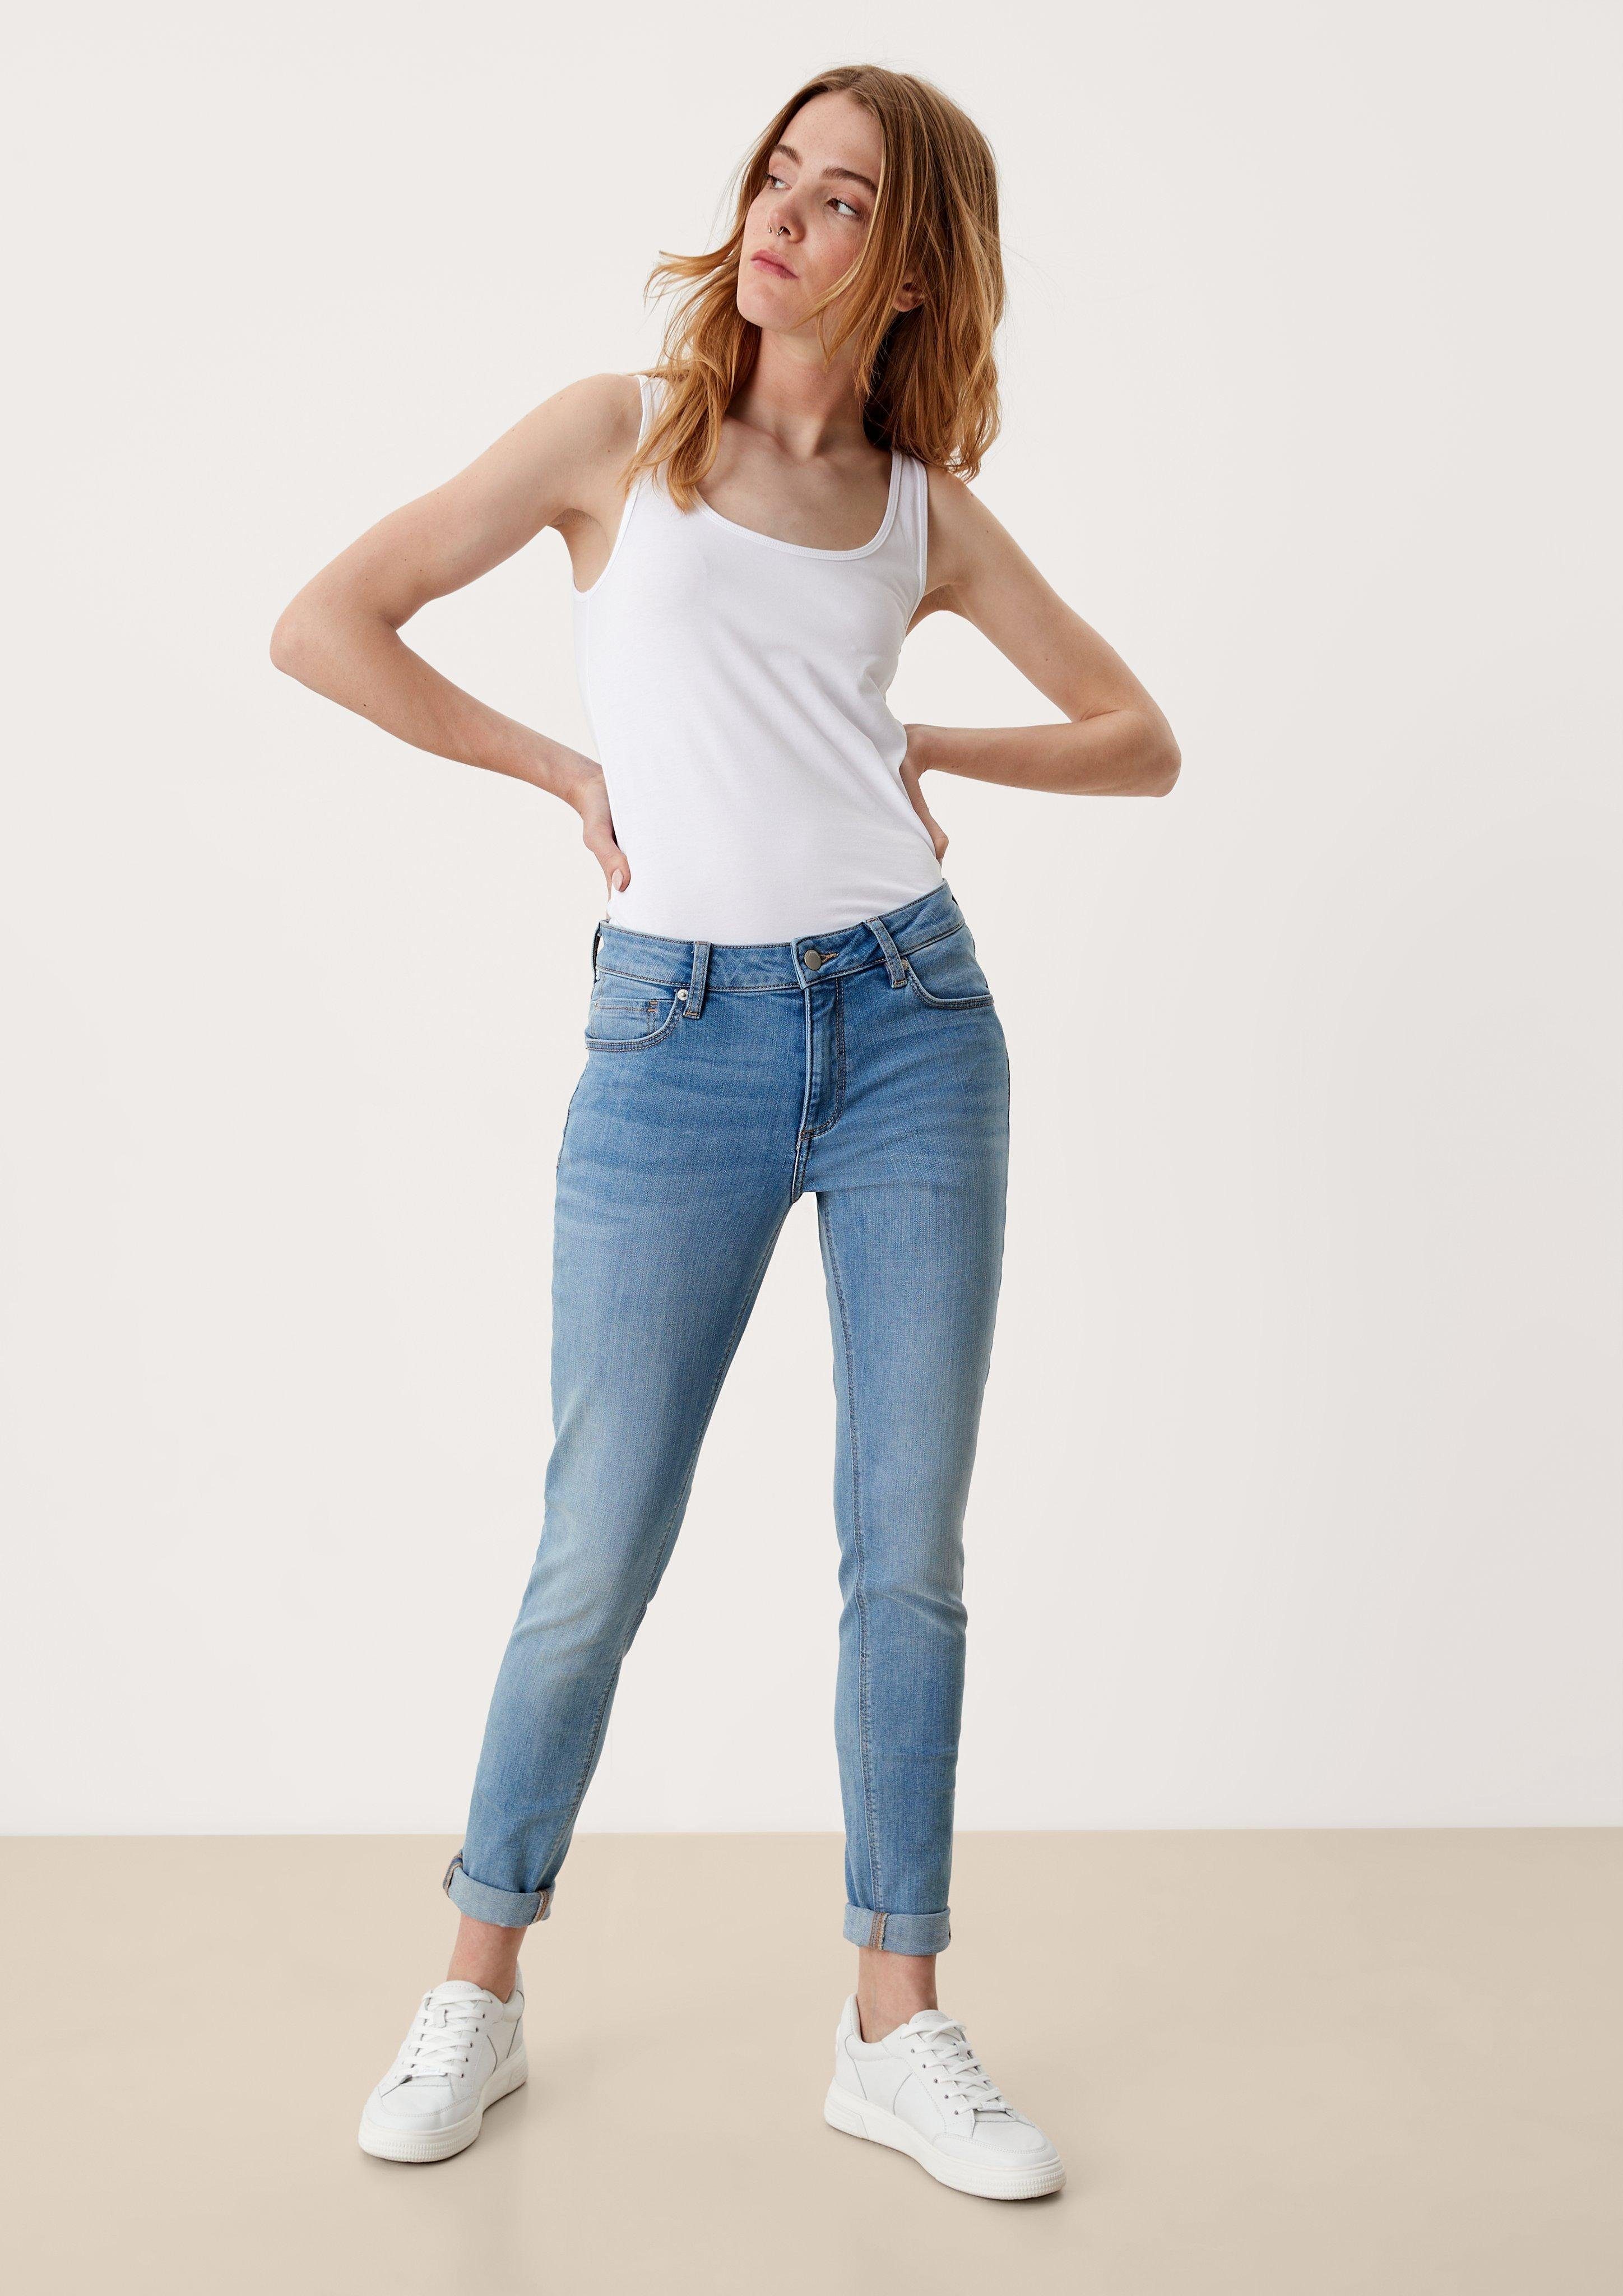 Jeans / Rise Stoffhose Waschung QS Skinny Sadie / / Mid Fit Leg Skinny himmelblau